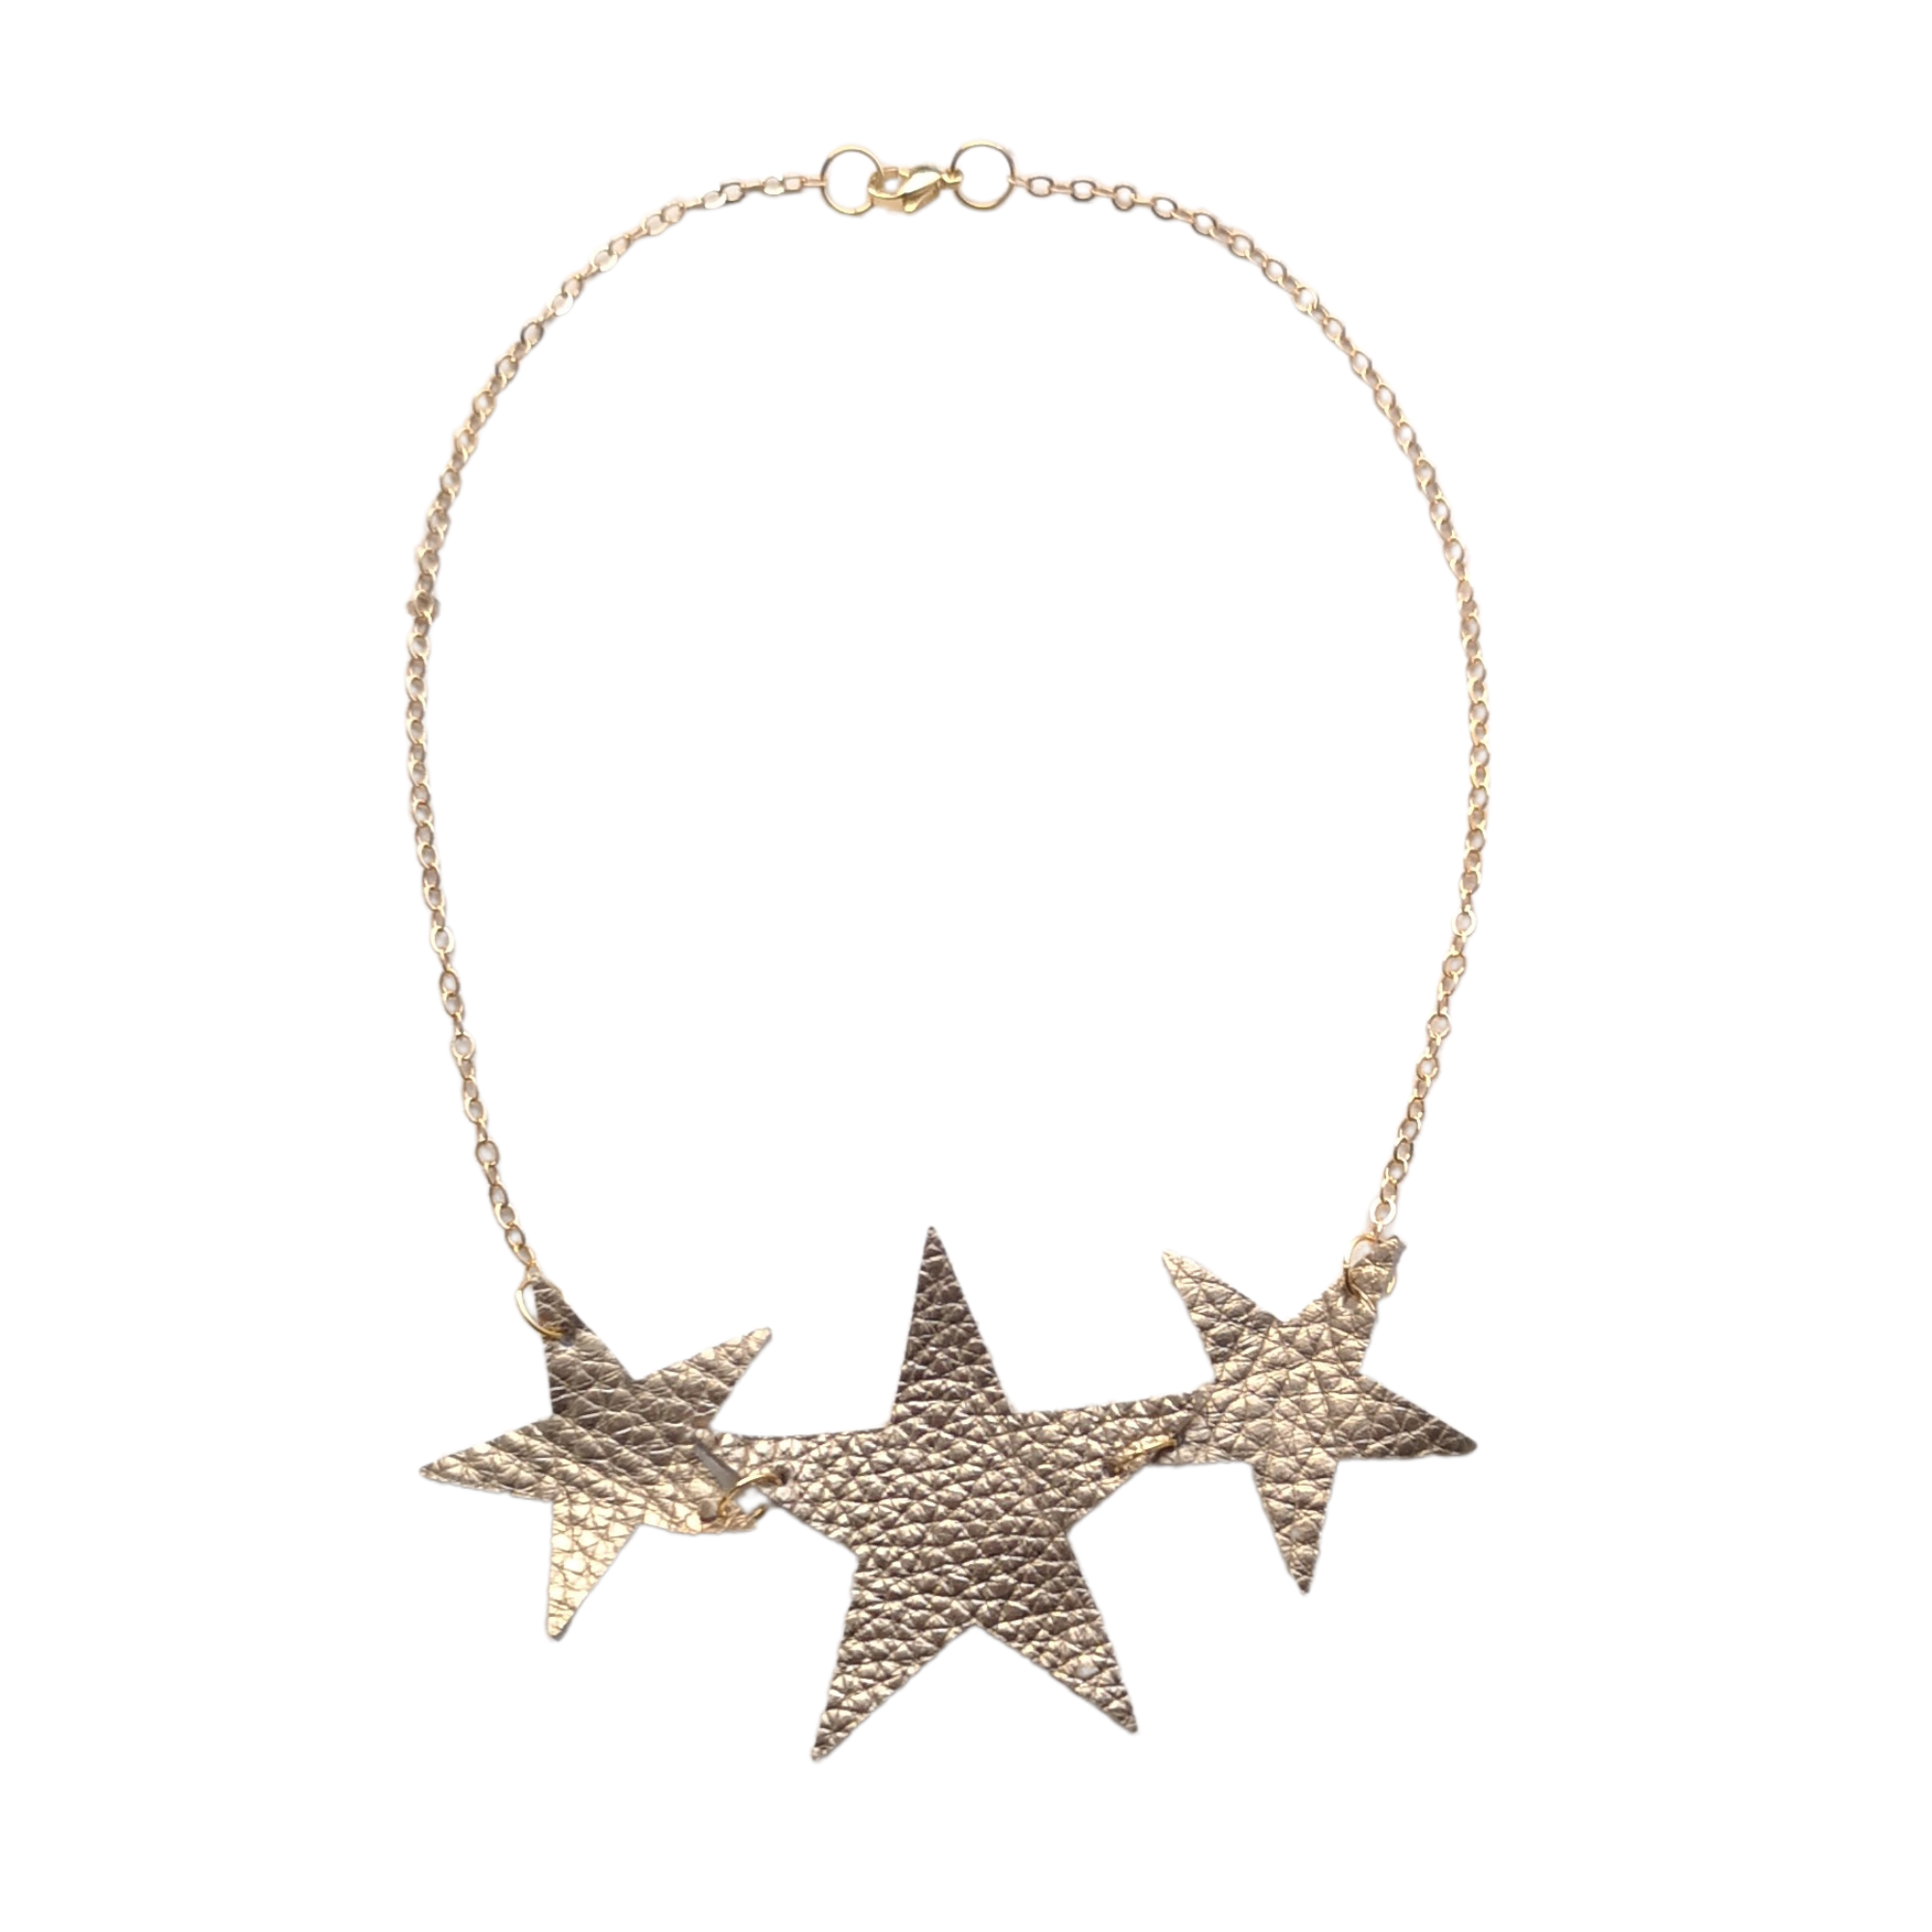 Réalt leather star necklace